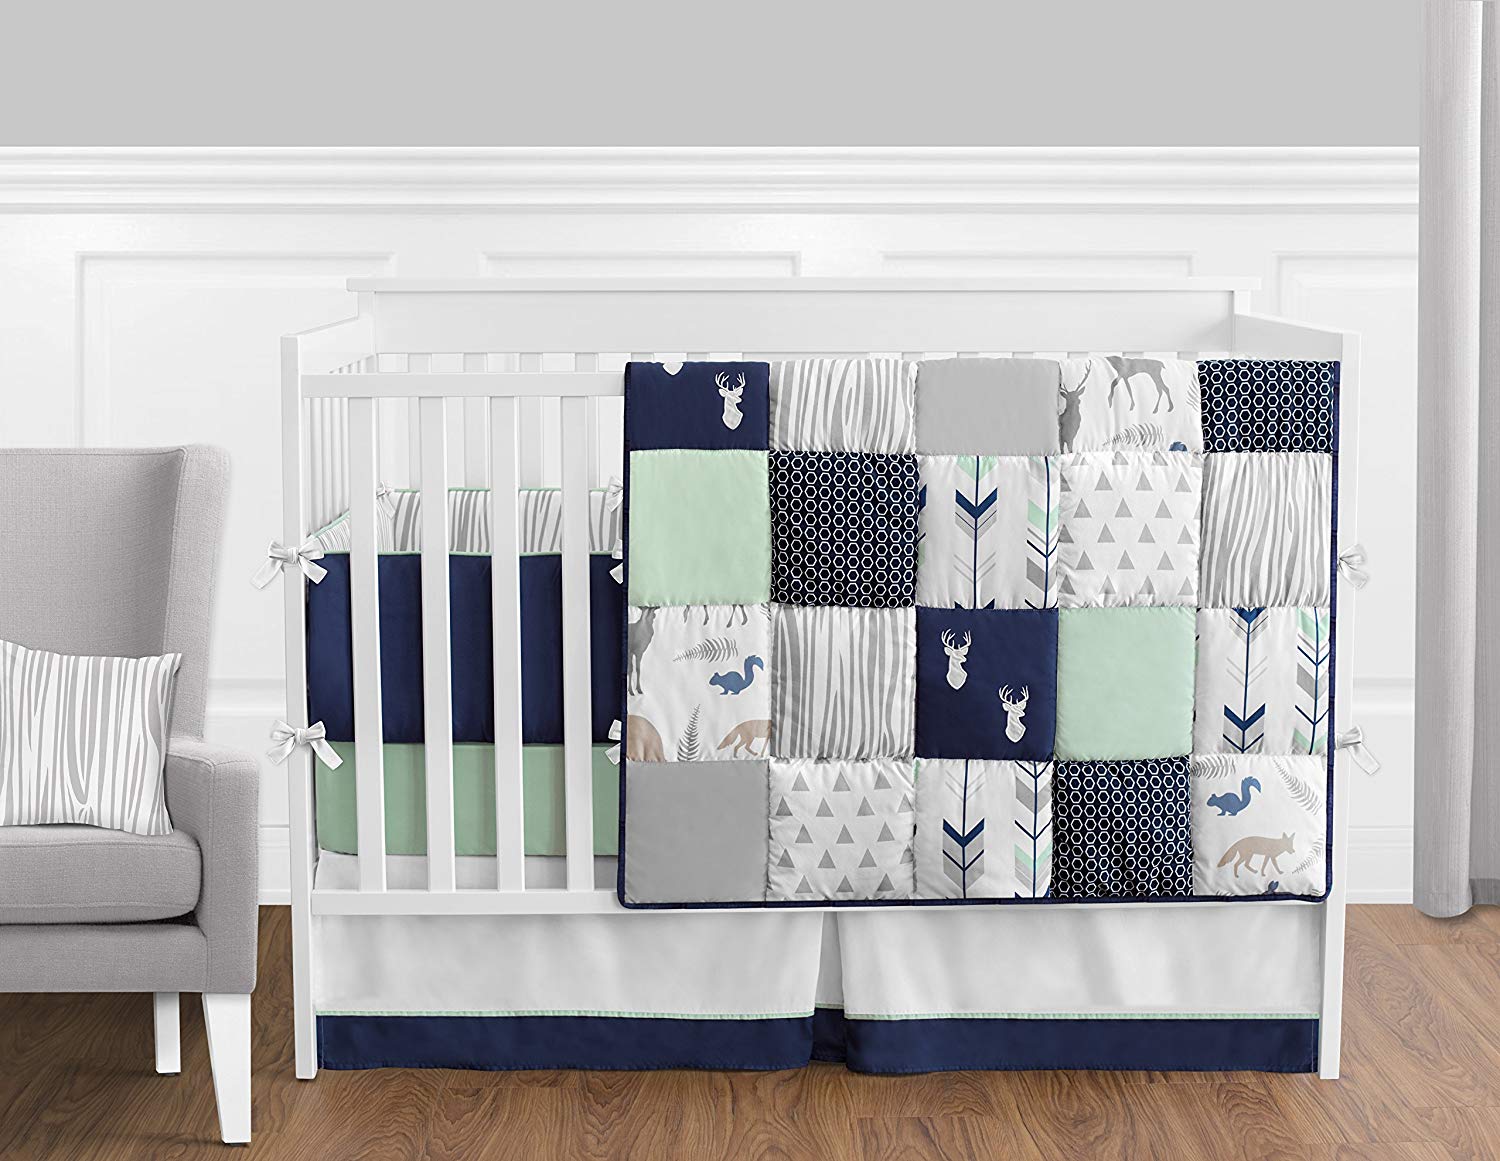 Baby bedding for boys amazon.com: cute Jojo designs 9-piece navy blue, mint and gray woody ANKSHHP